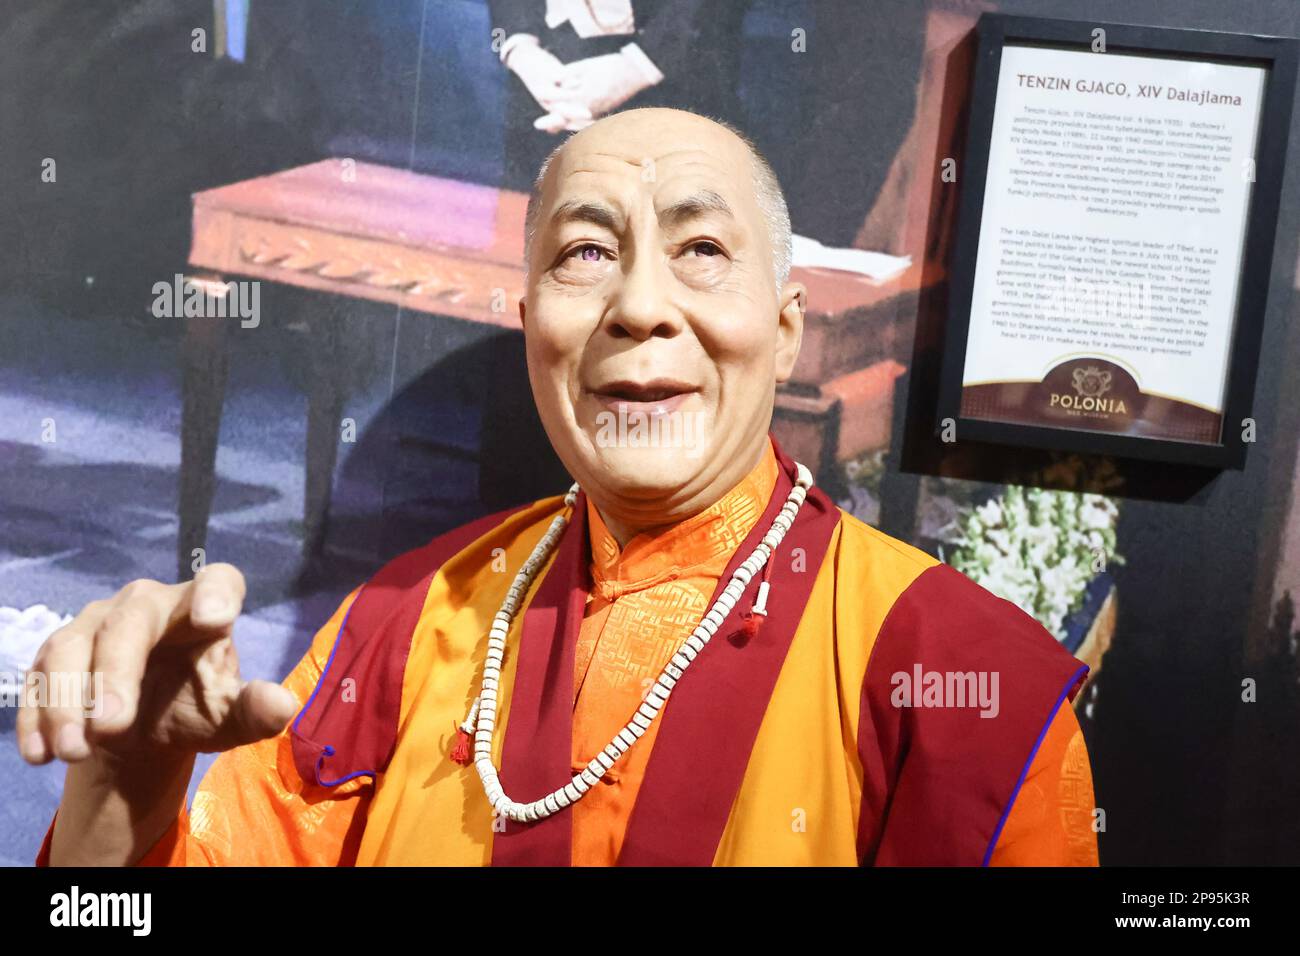 Krakow, Poland, 10.03.2023. 14th Dalai Lama Tenzin Gjaco wax figure at the Polonia Wax Museum. Stock Photo